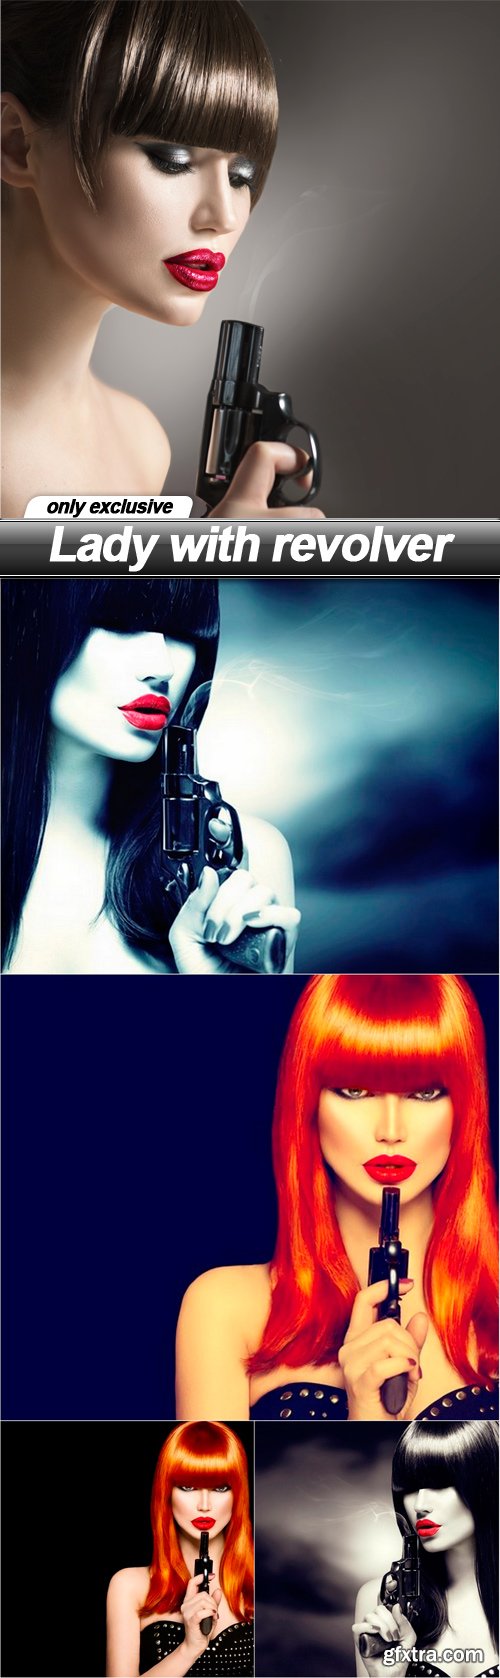 Lady with revolver - 5 UHQ JPEG